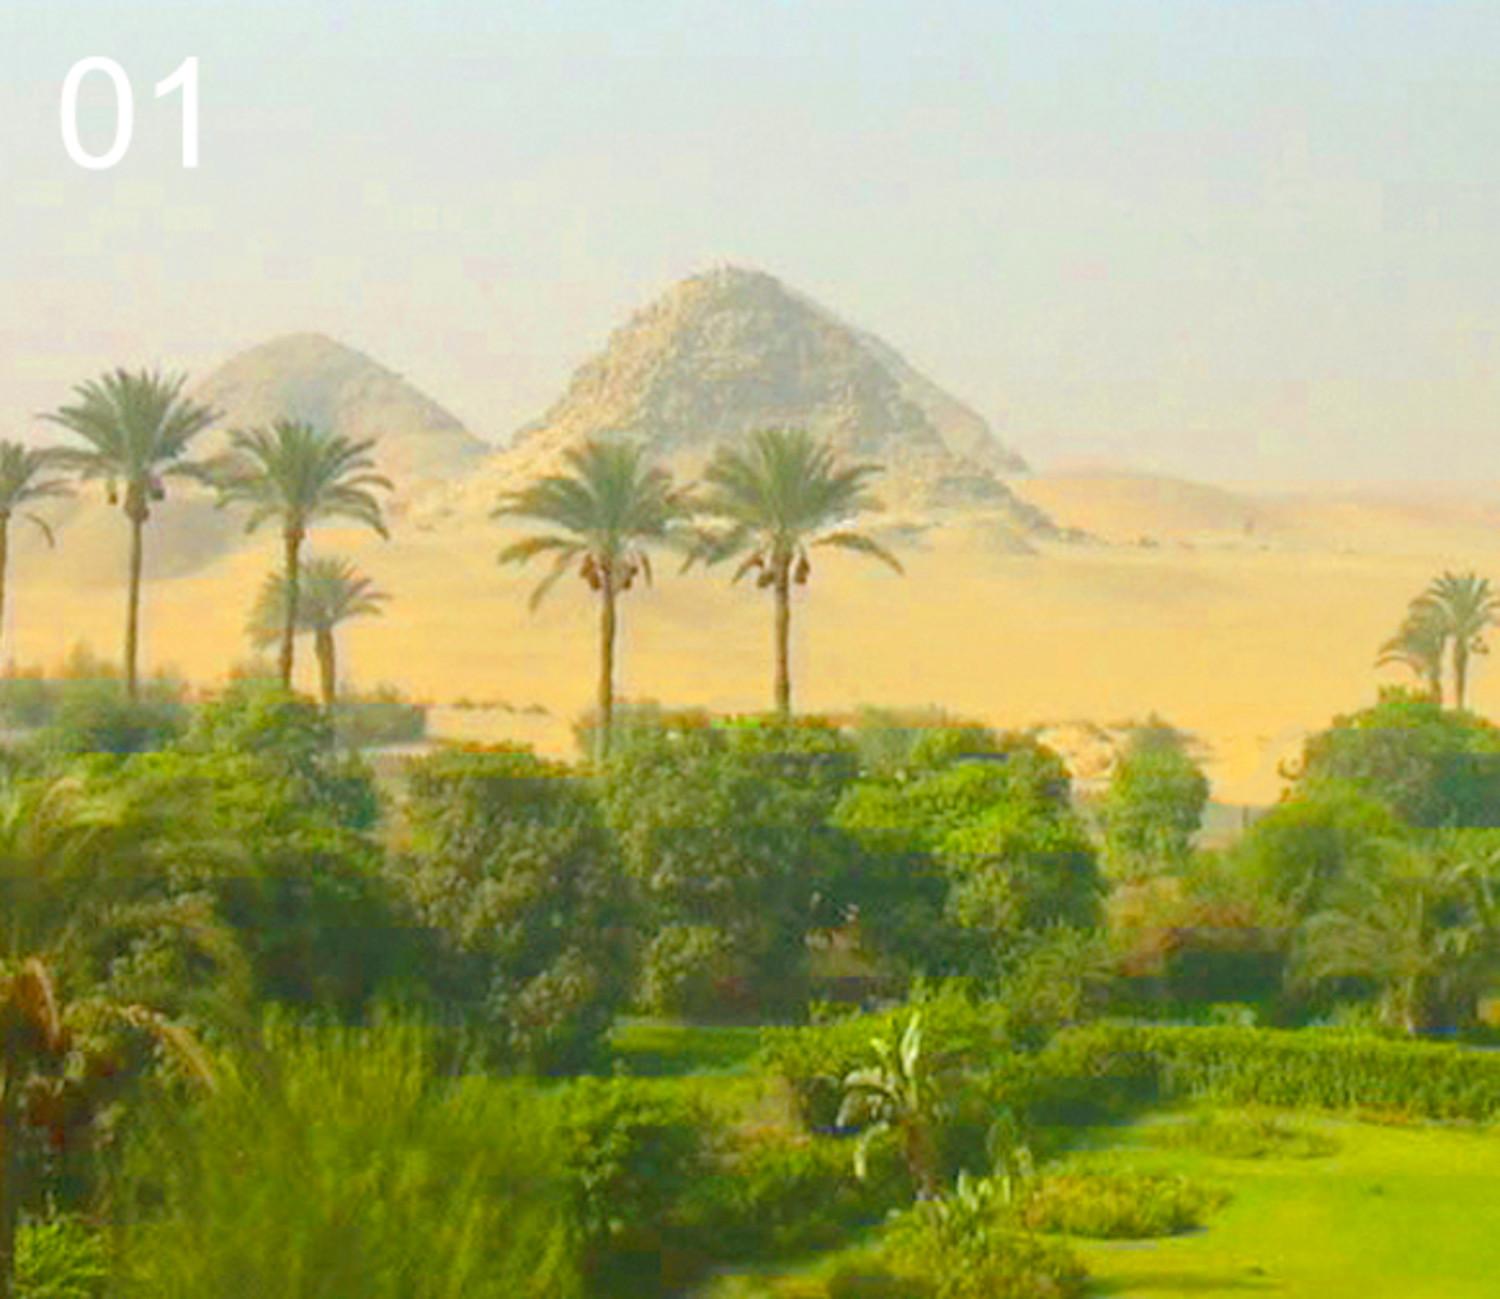 The Edge of Abusir, Shobramant District, Giza